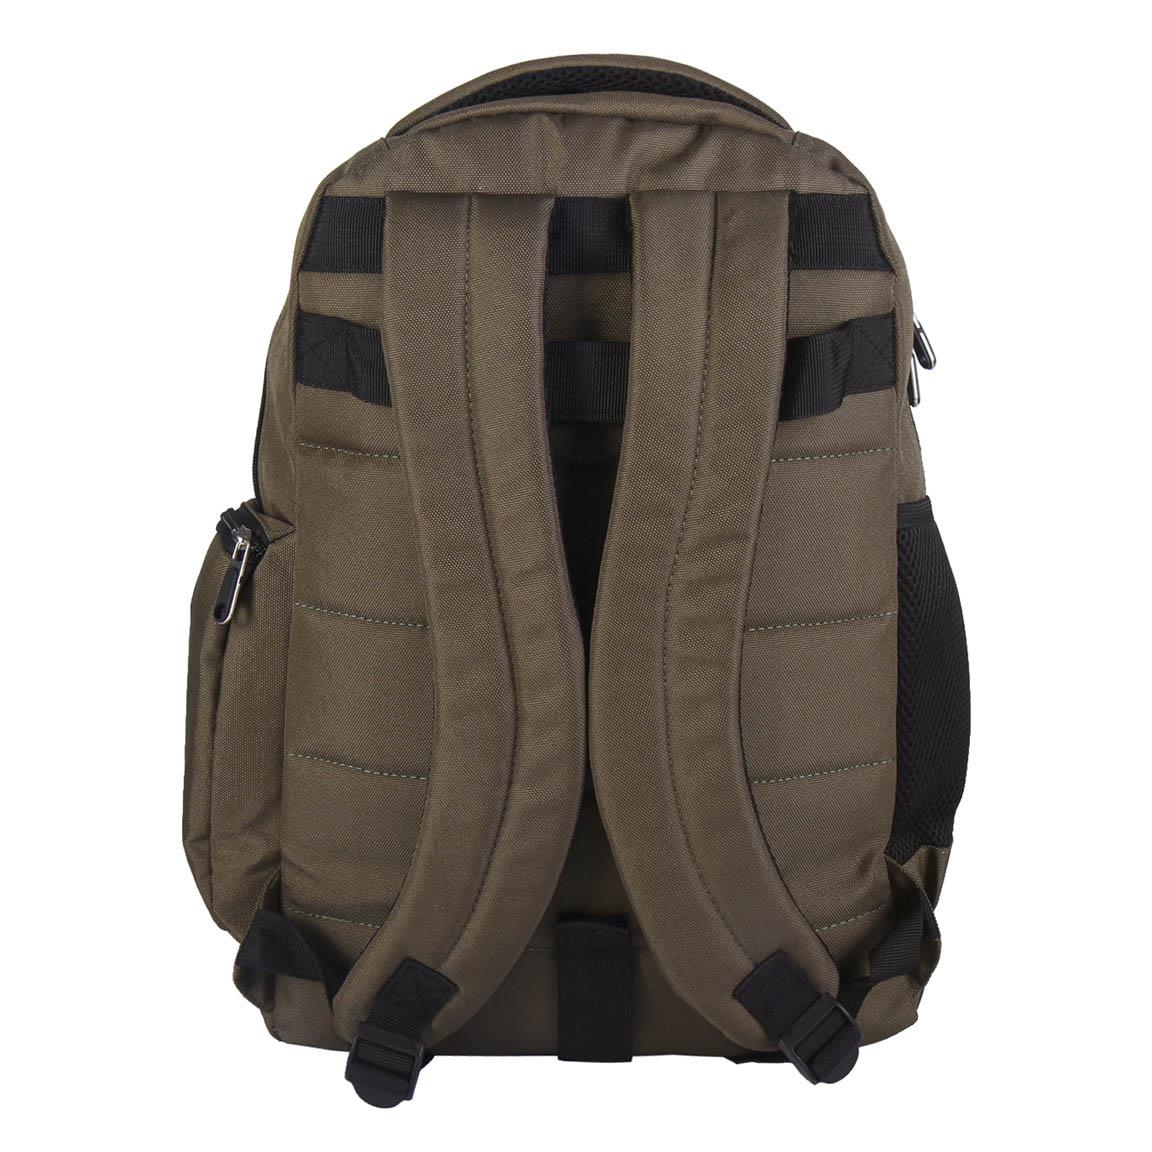 Backpack Σχολική Τσάντα Marvel